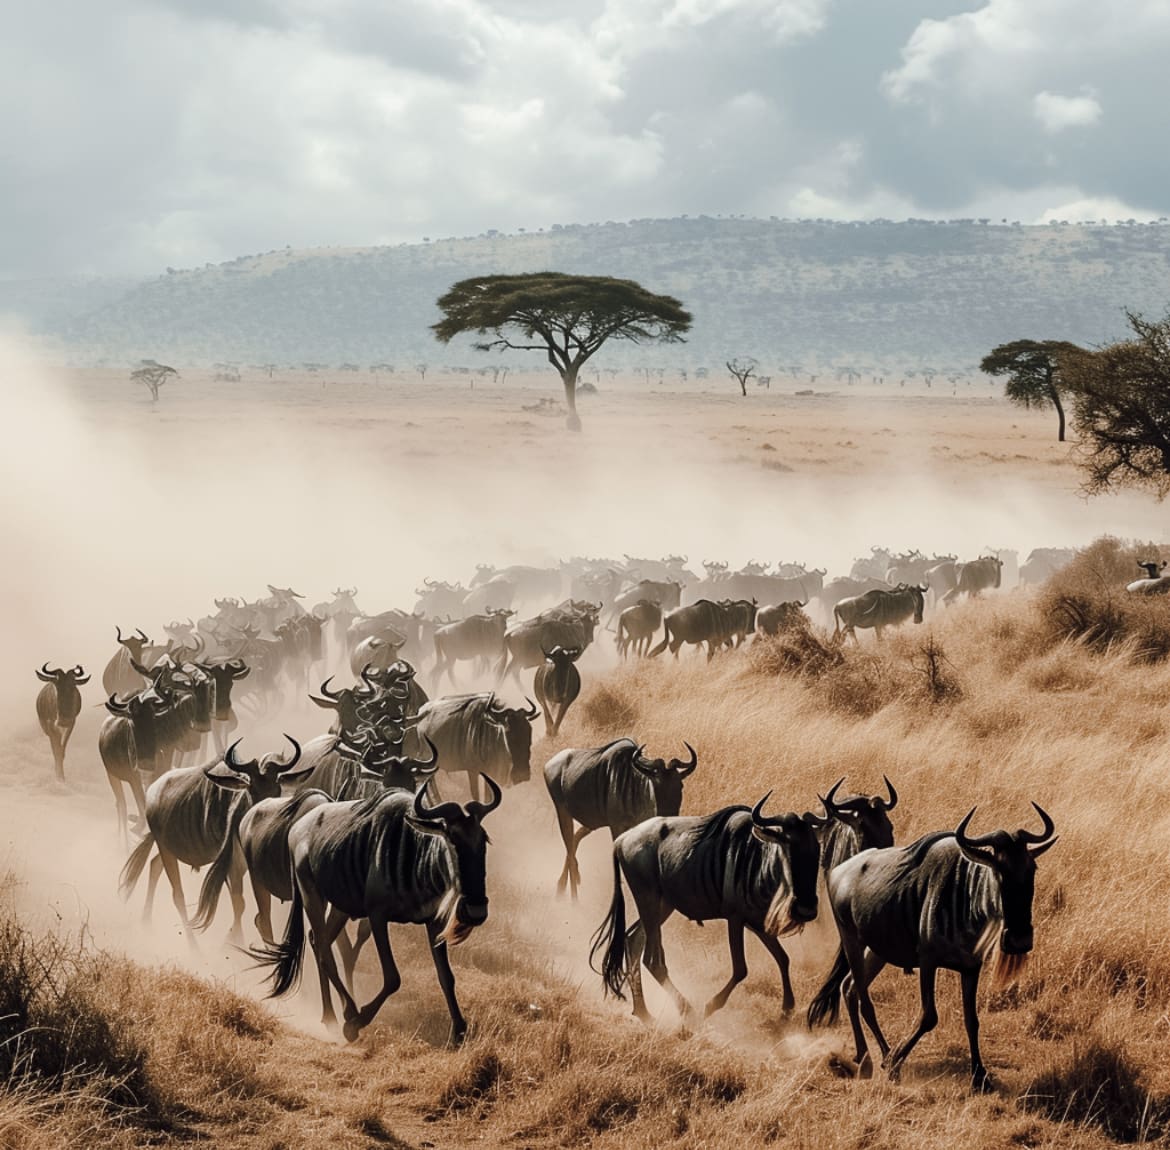 Migration herd on the run in Tanzania